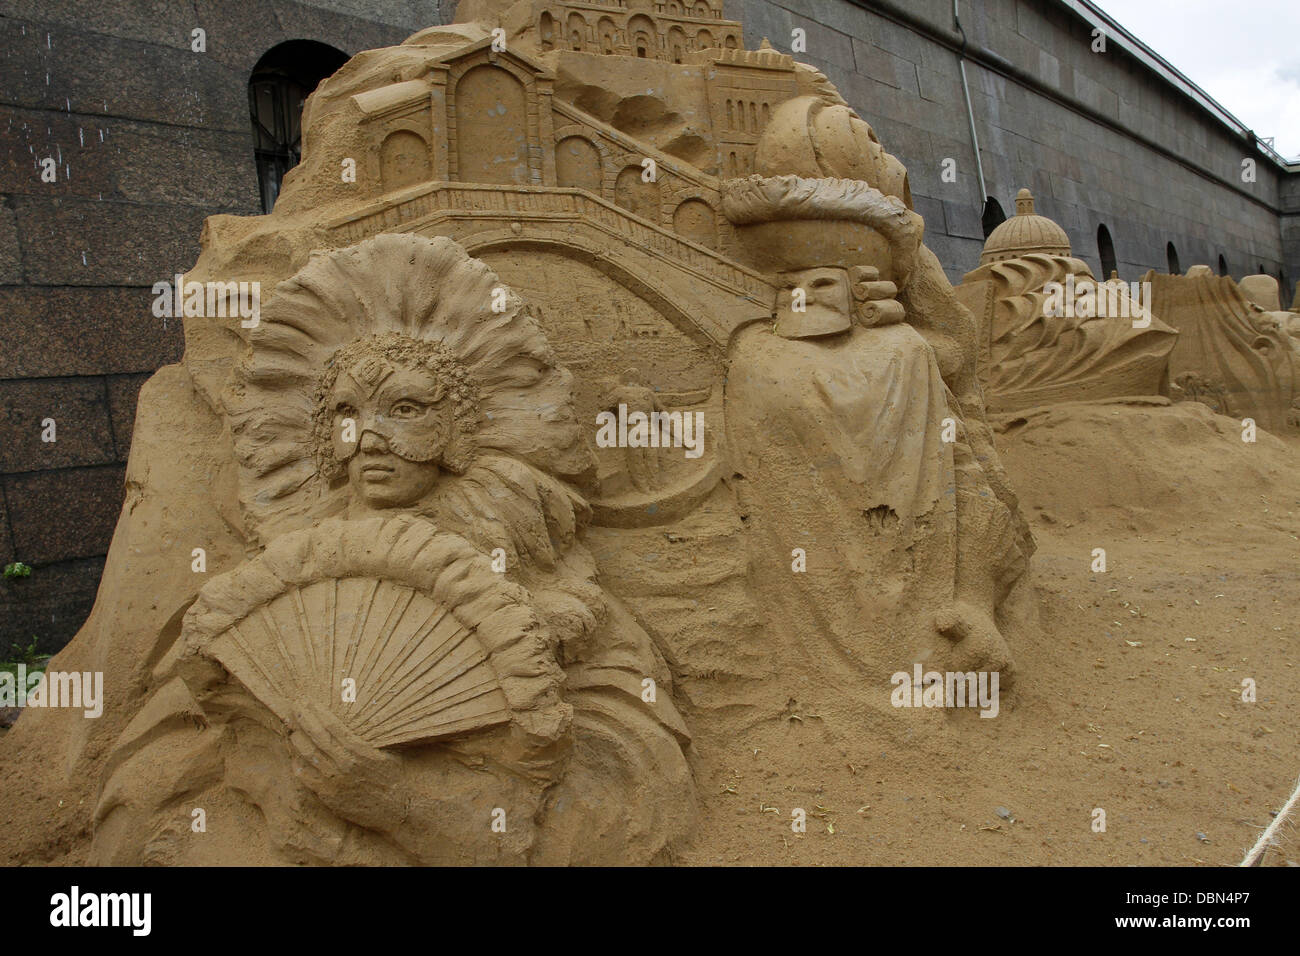 The world's most epic sandcastle contest The Sand Sculpture ...